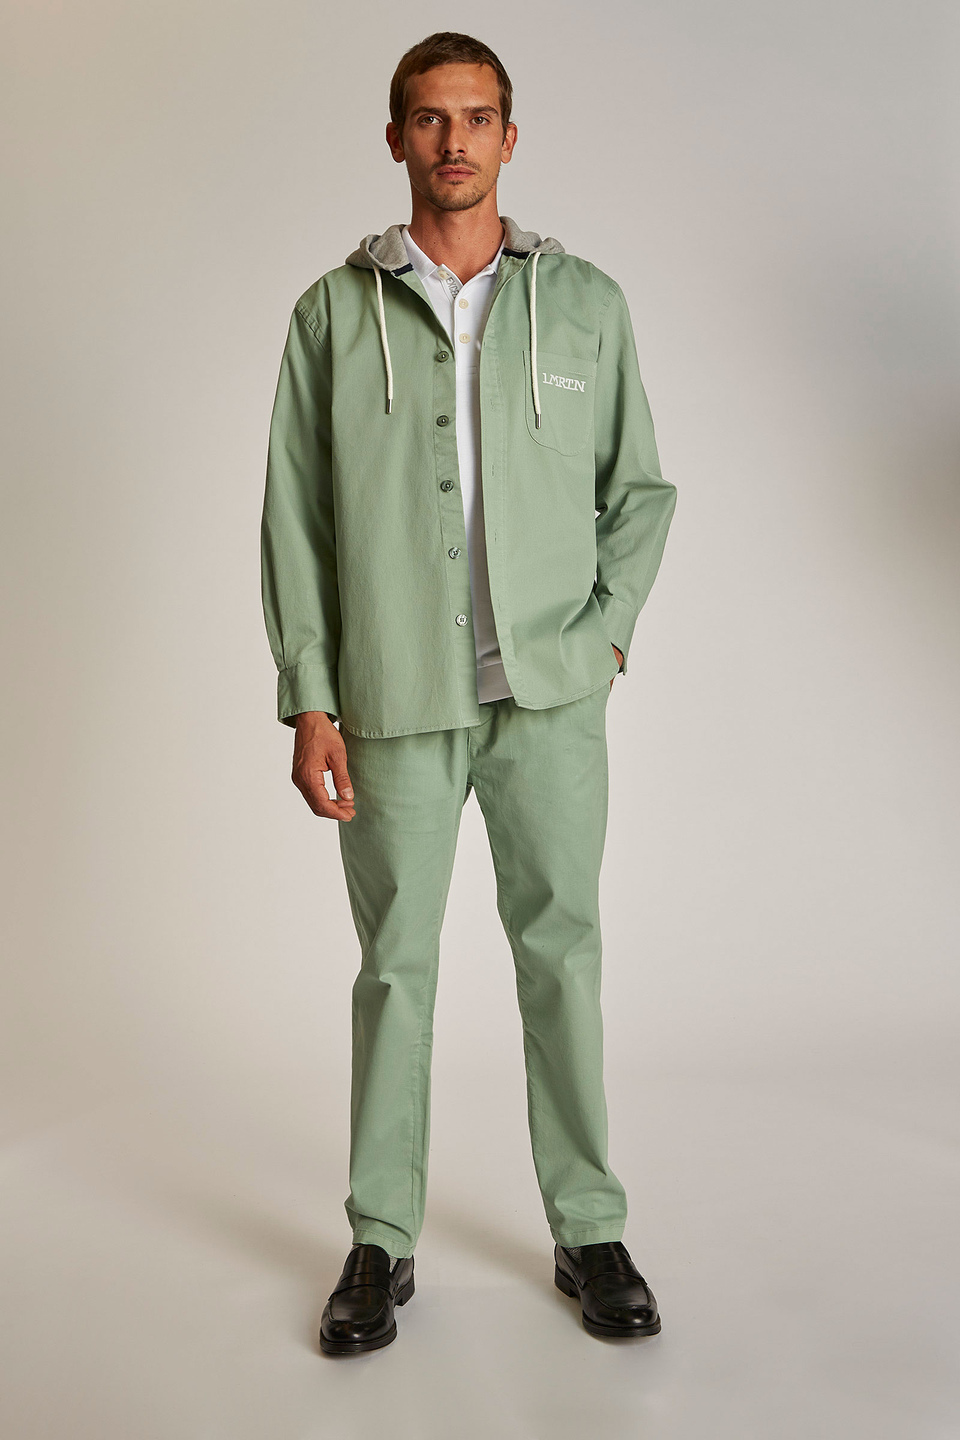 Chaqueta de hombre de algodón 100 % con capucha, modelo oversize - La Martina - Official Online Shop